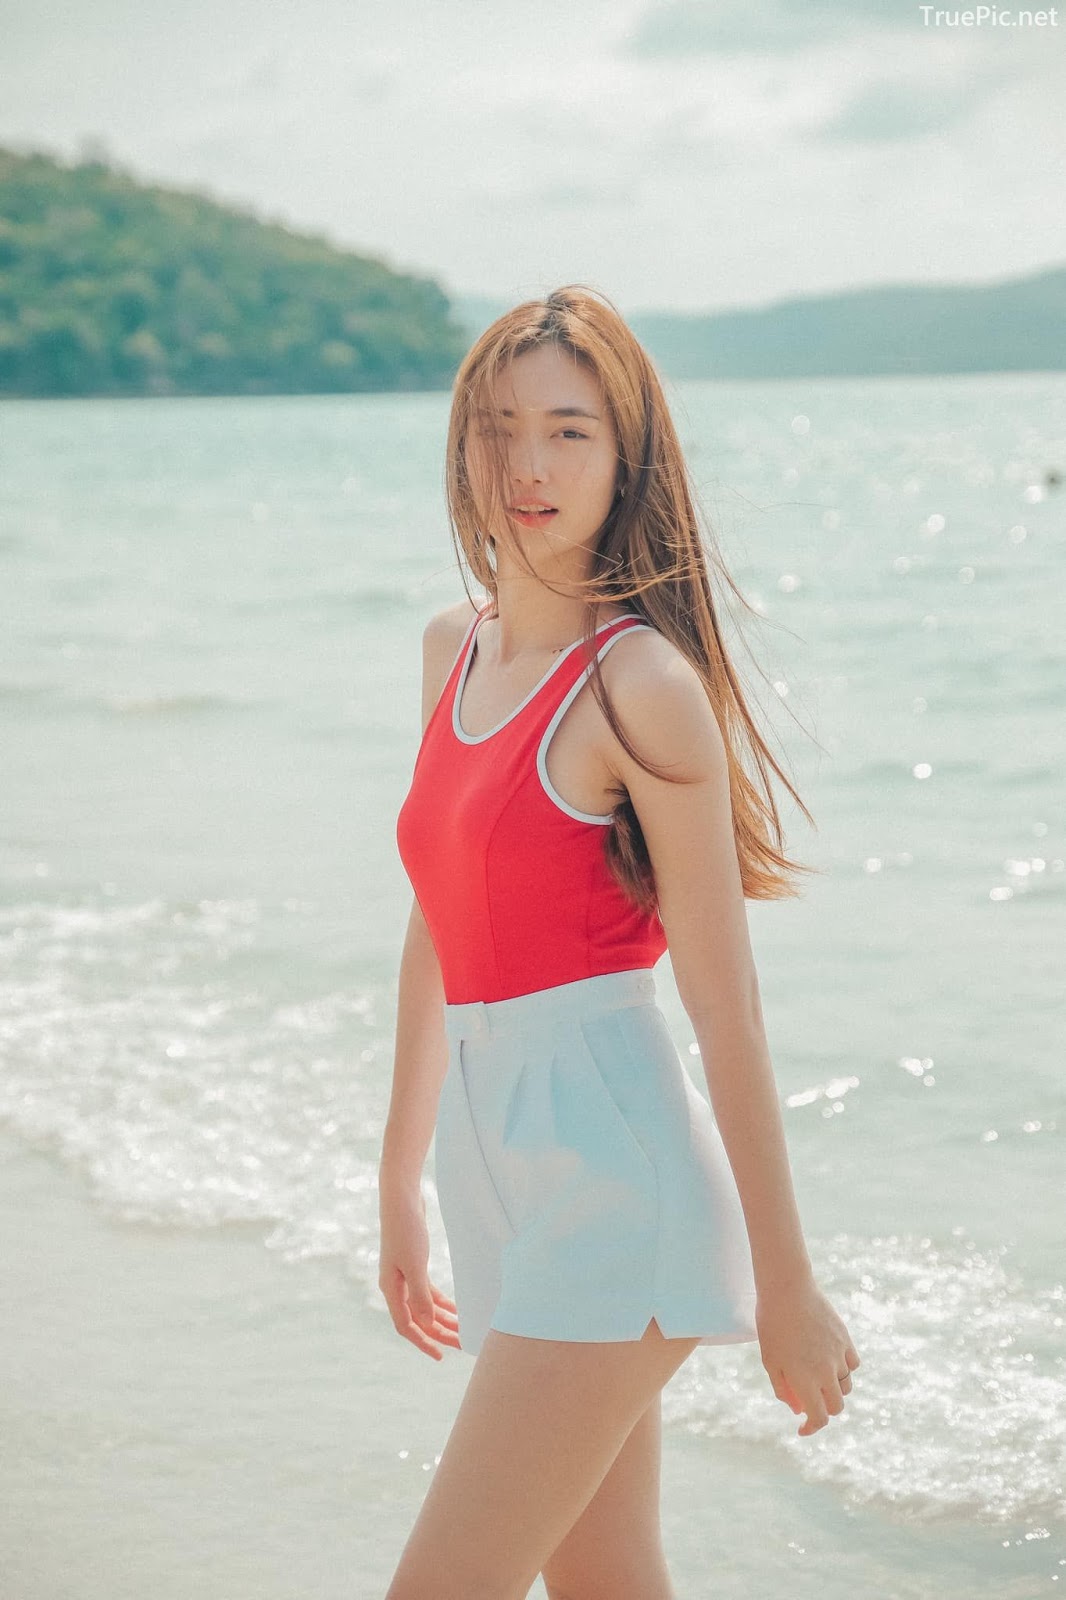 Miss Teen Thailand - Kanyarat Ruangrung - The Red Monokini On The Beach - TruePic.net - Picture 22